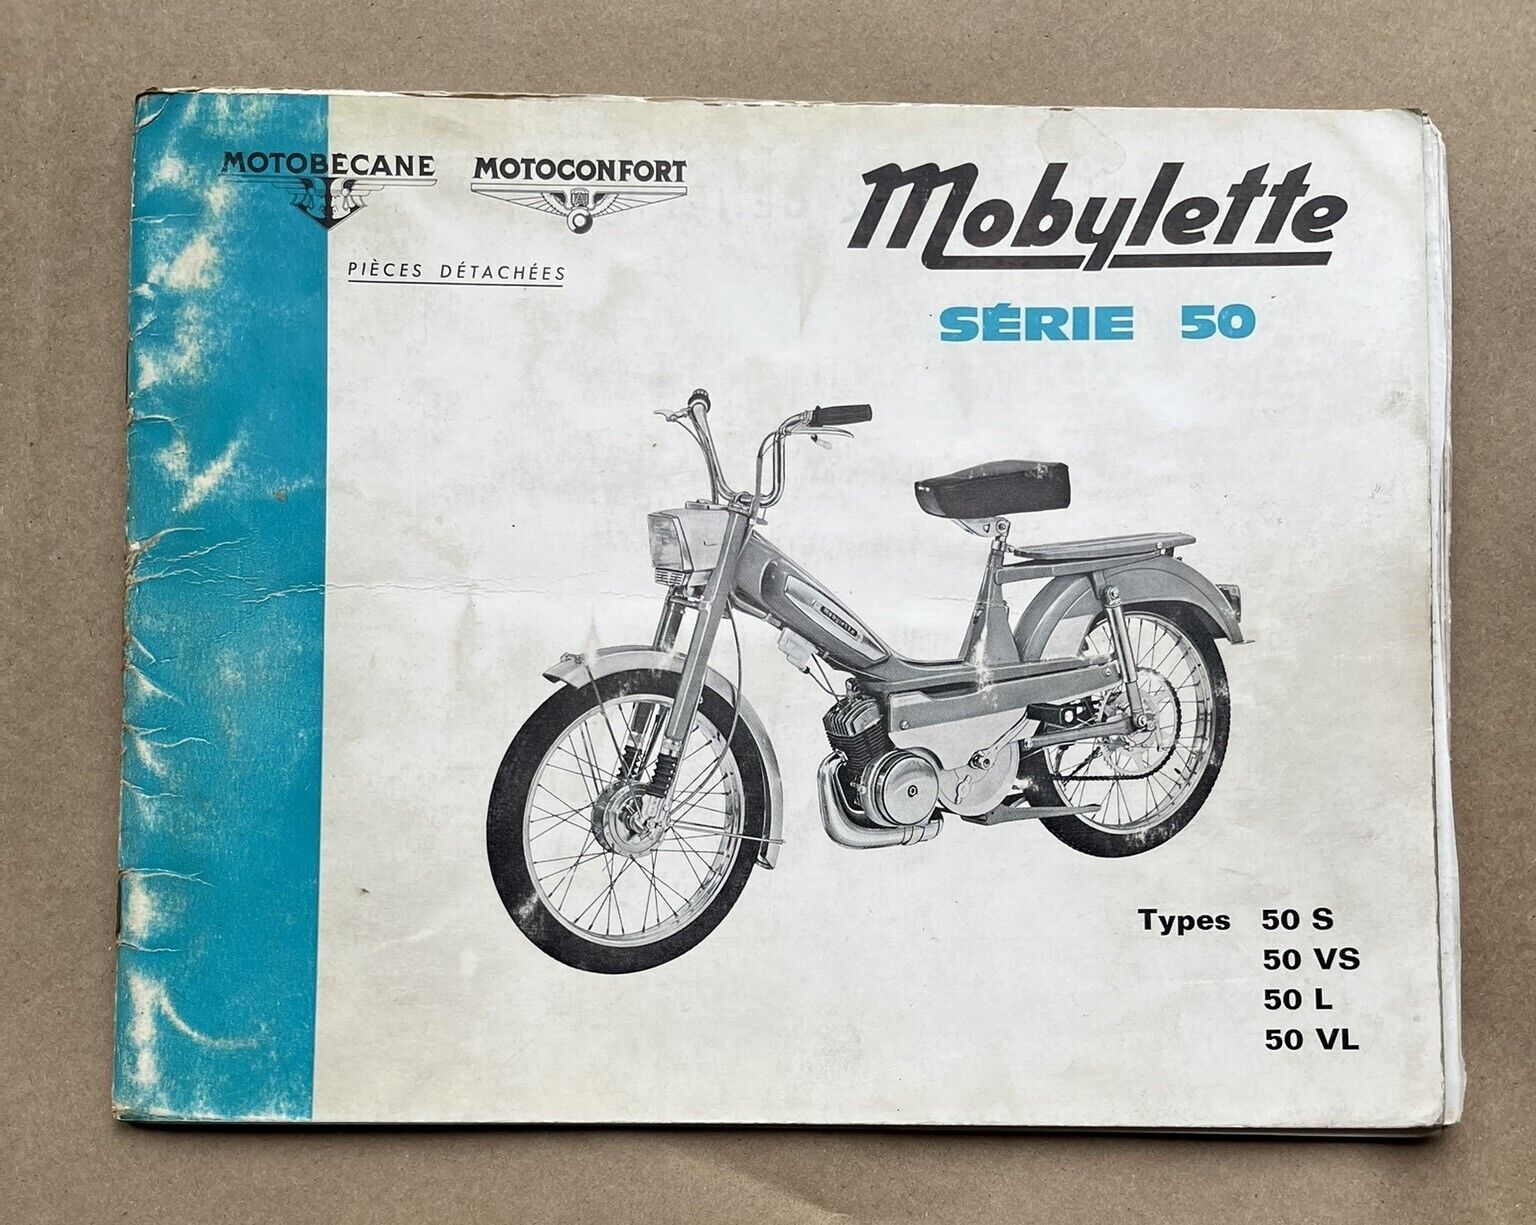 Motobecane Motoconfort Mobylette Type Series 50S VS L VL Spare Part Catalog A